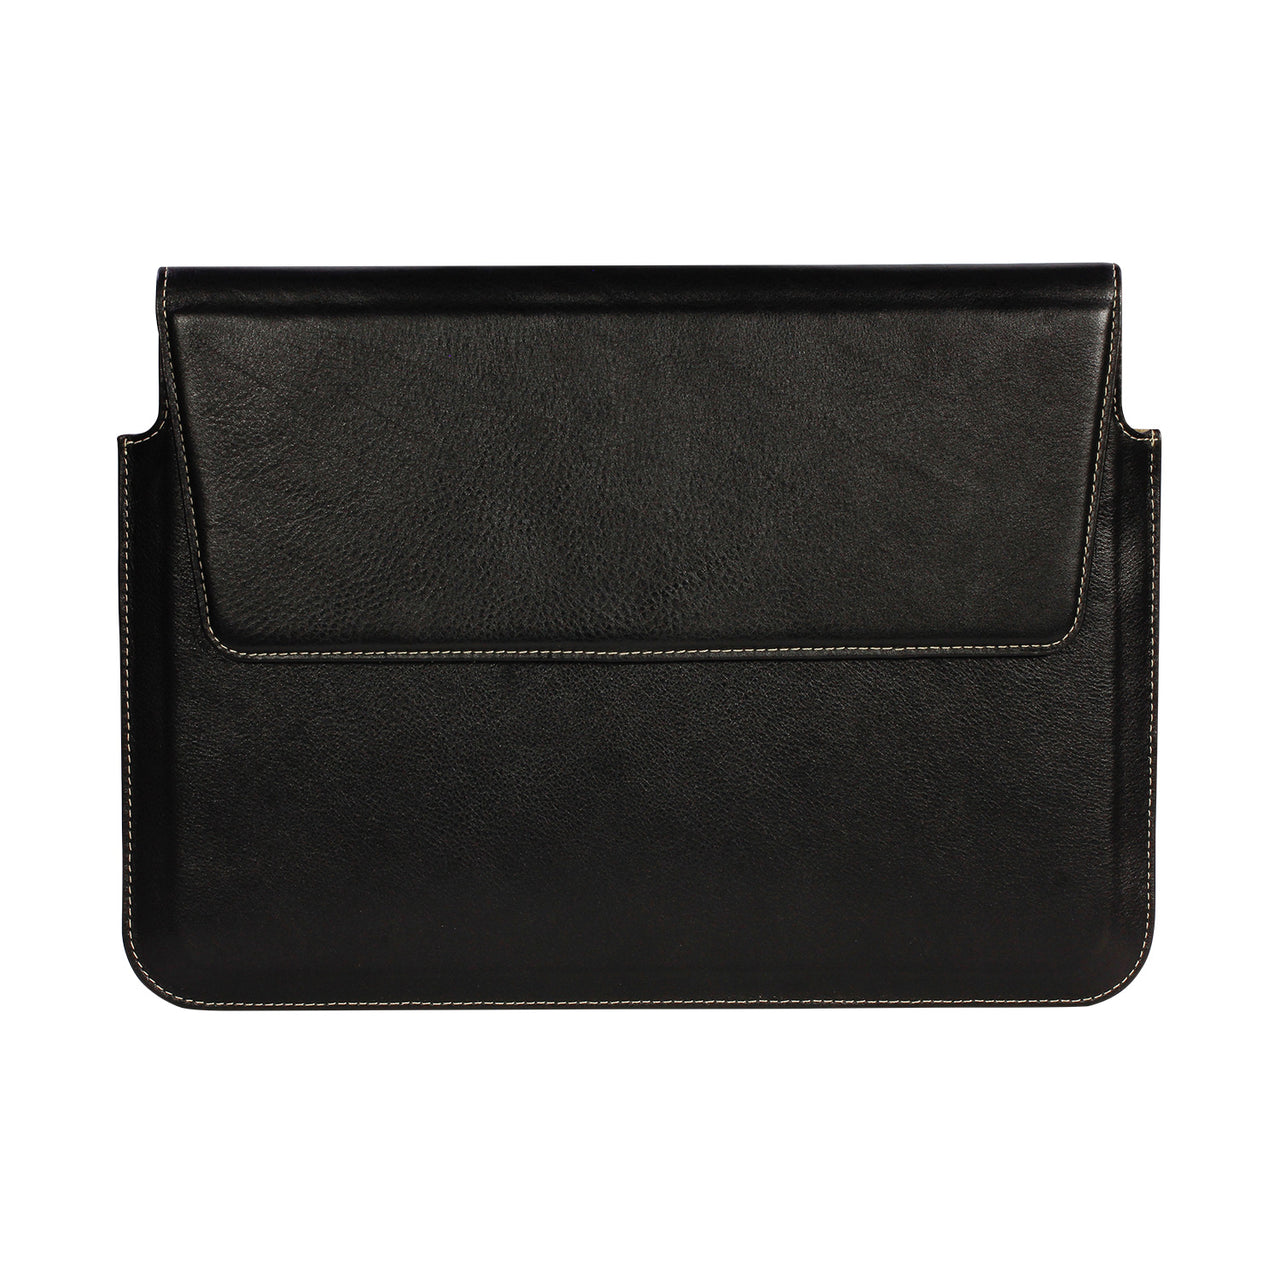 MacBook Pro M1 (13", 2020) Genuine Leather Sleeve Case | Artisansuit